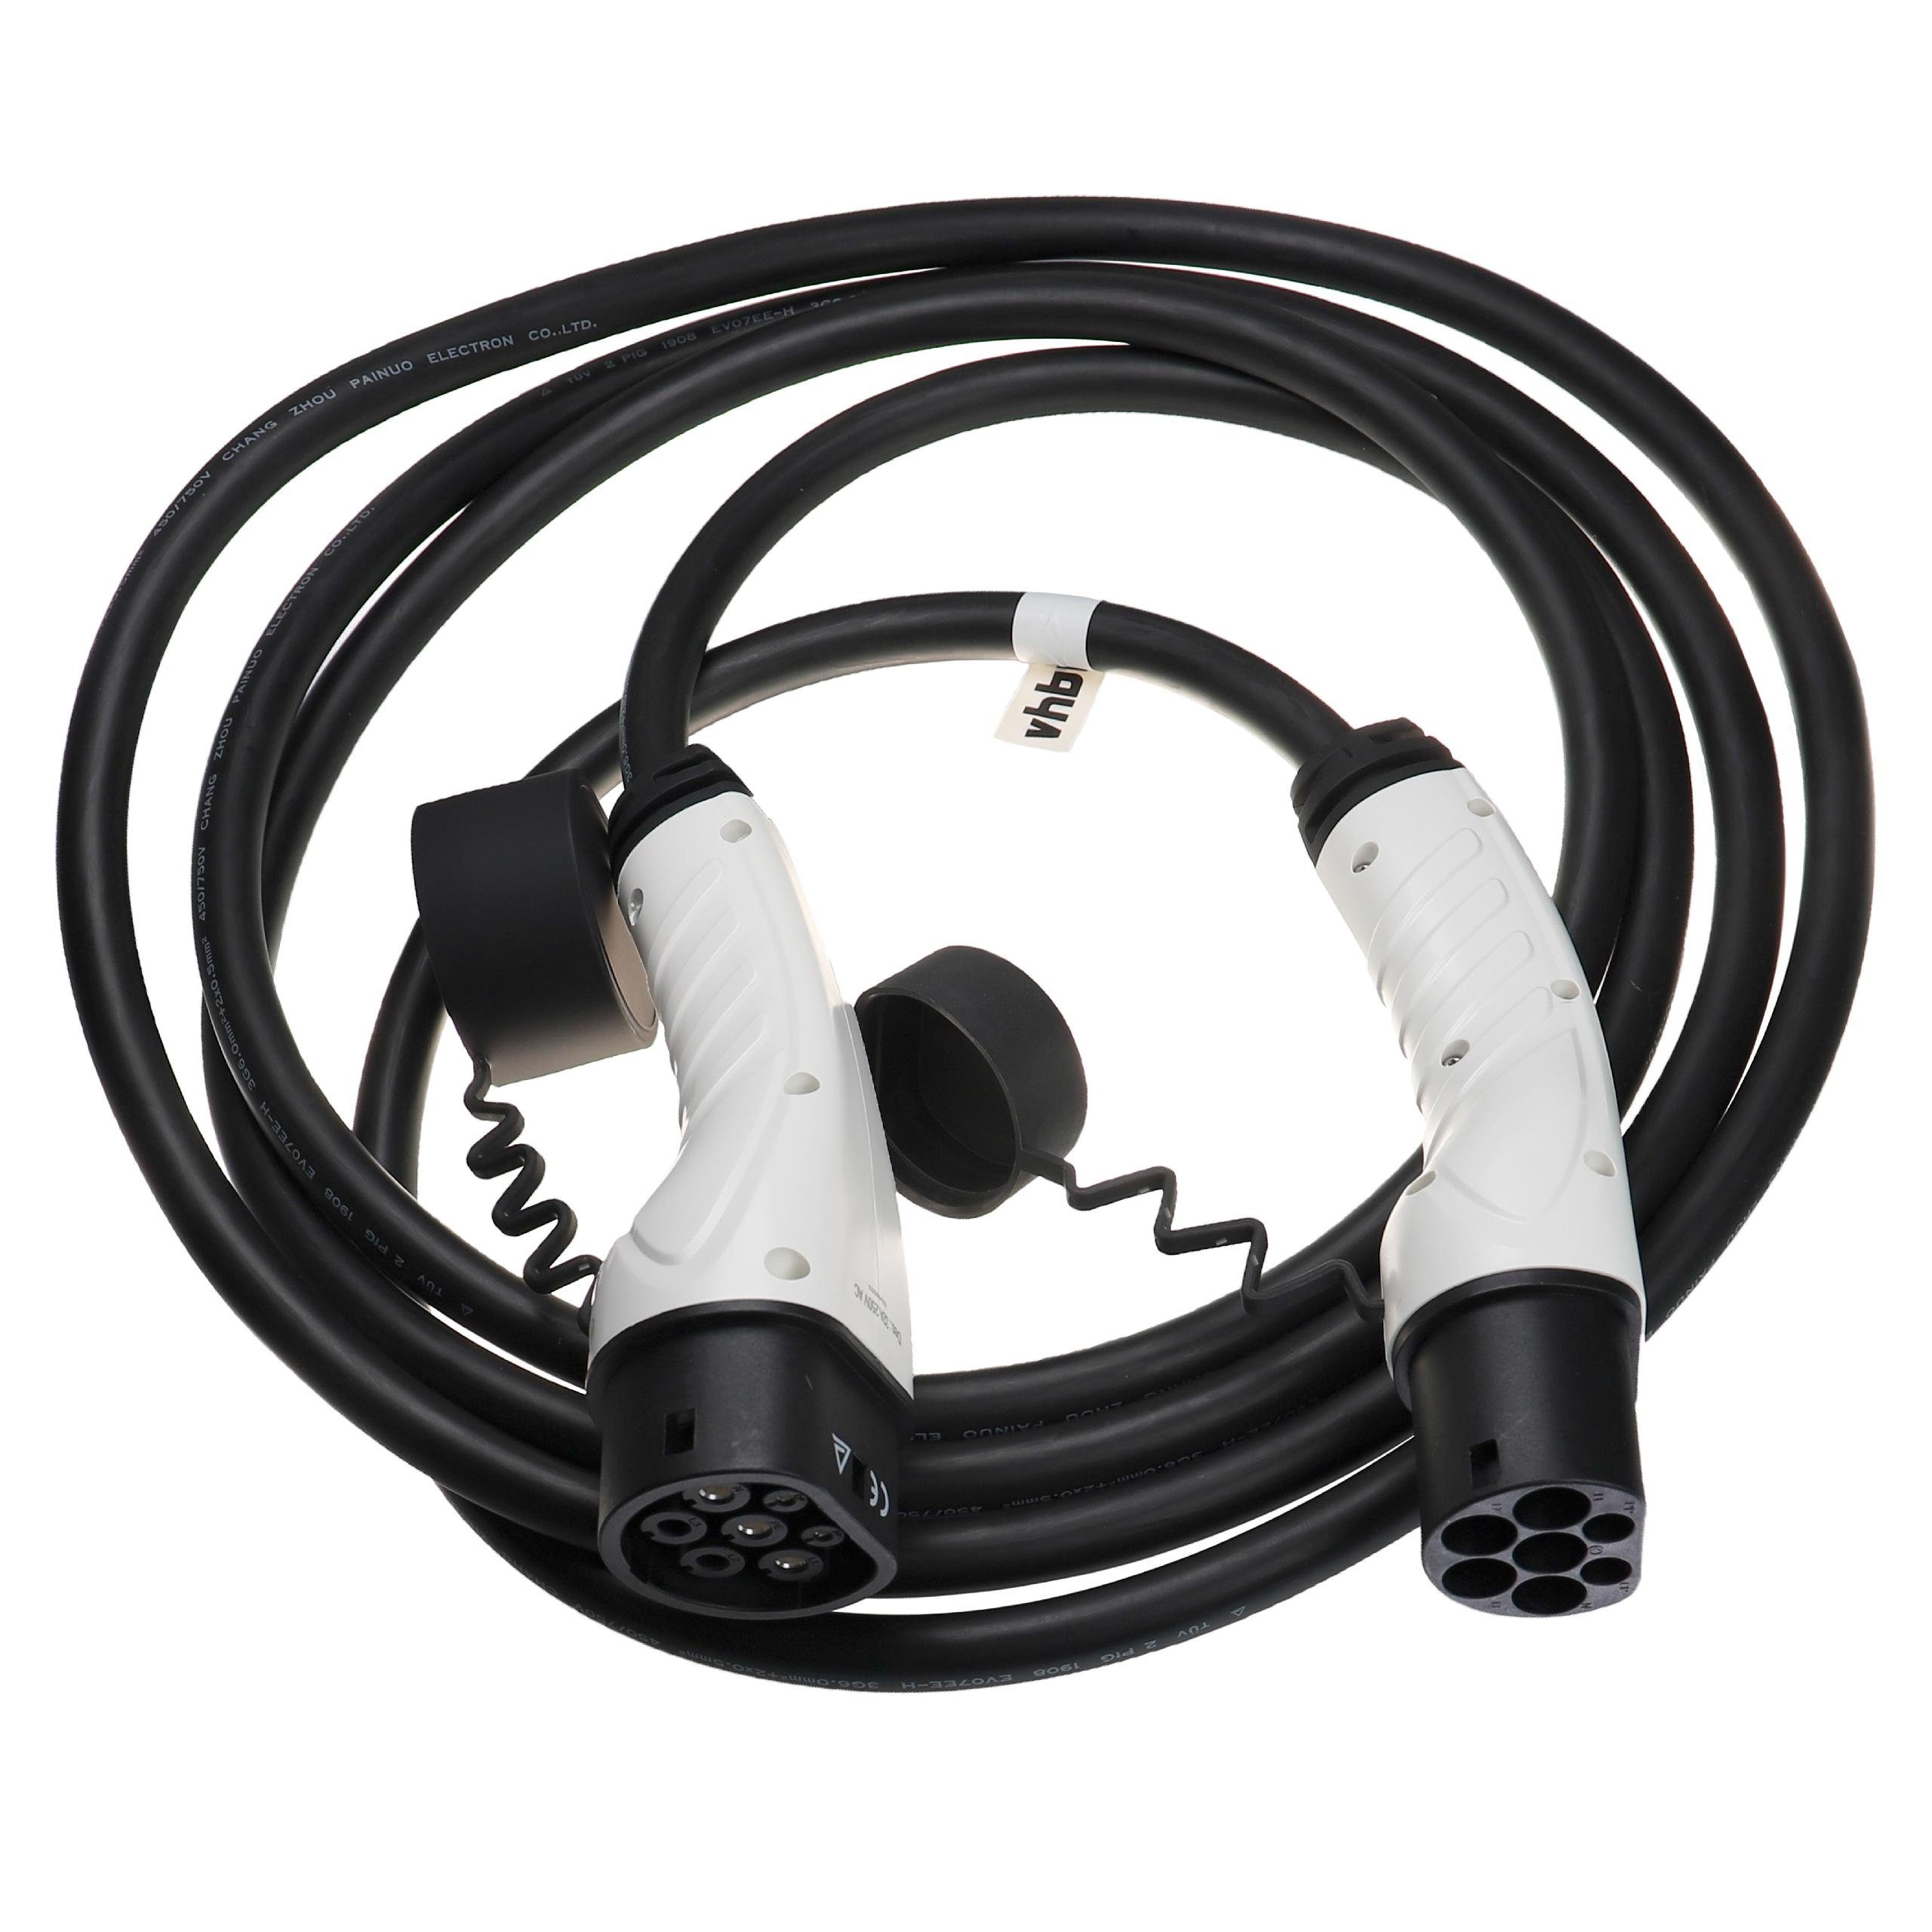 Plug-in-Hybrid Ladekabel Tonale passend / Alfa vhbw Elektroauto Elektro-Kabel für Romeo